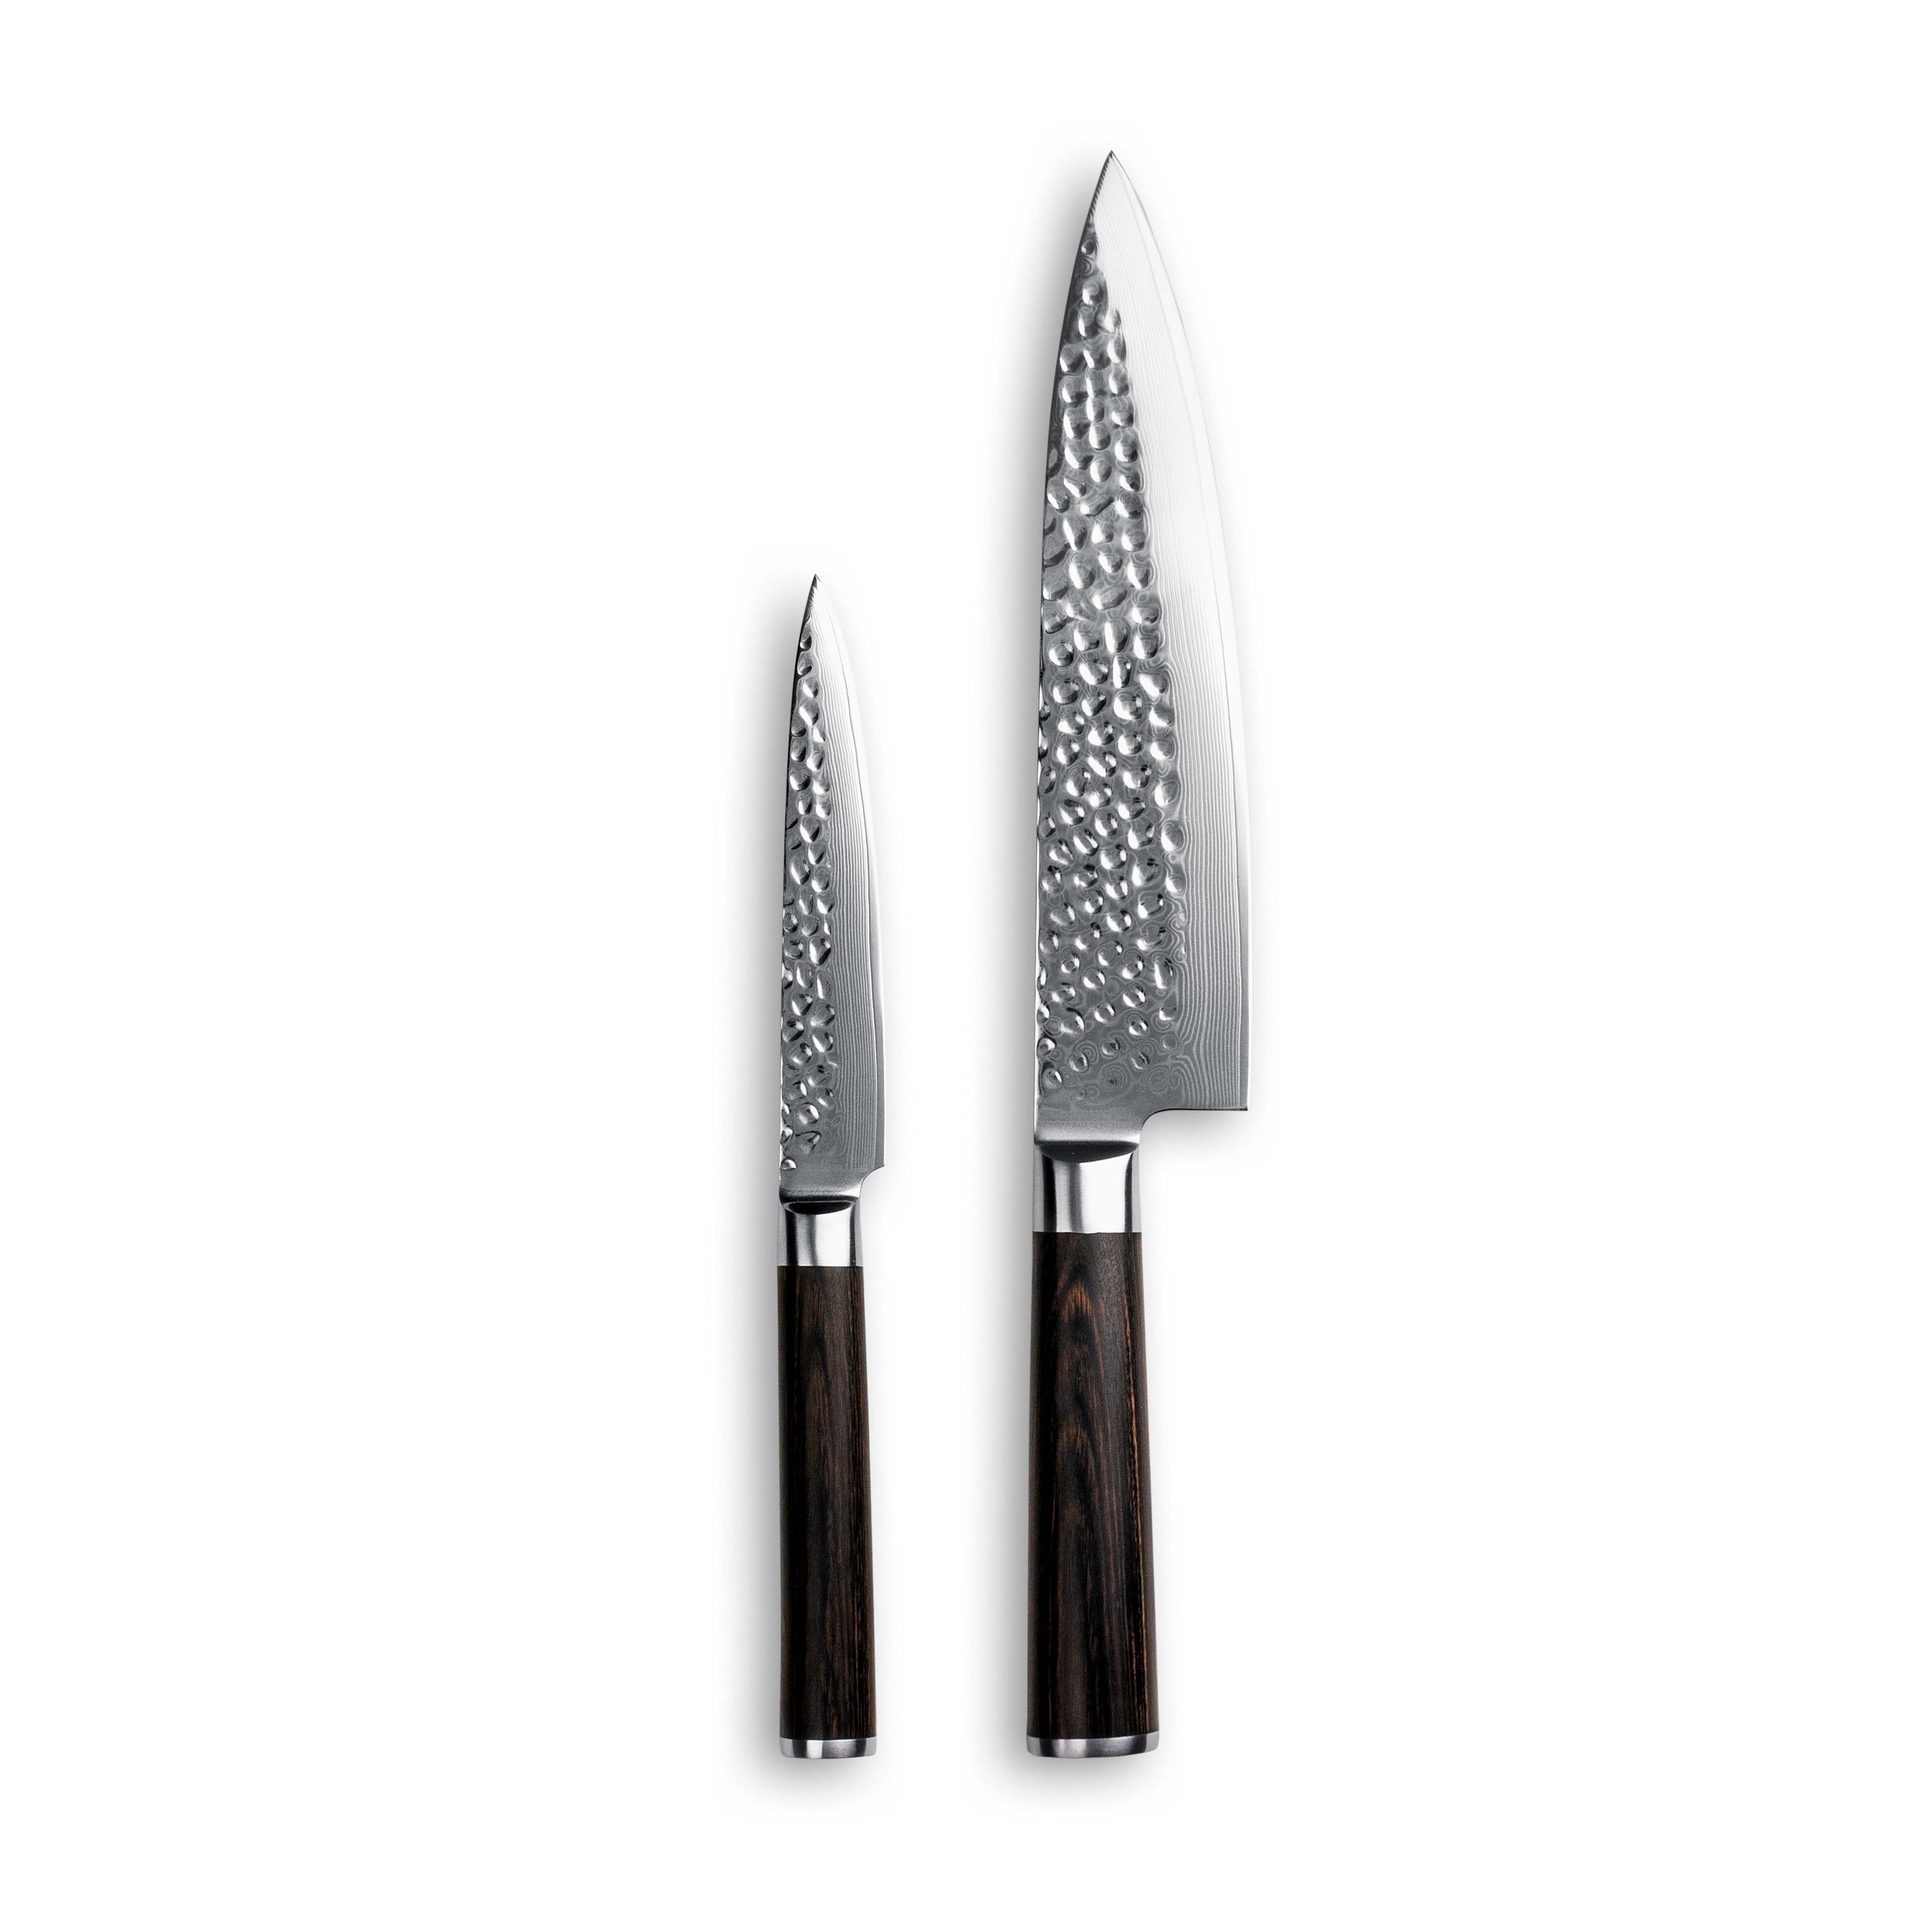 Maxim Andrew Halliday cilia Knivsæt - 2 knive - 67 lags stål - kokke- og utilitykniv